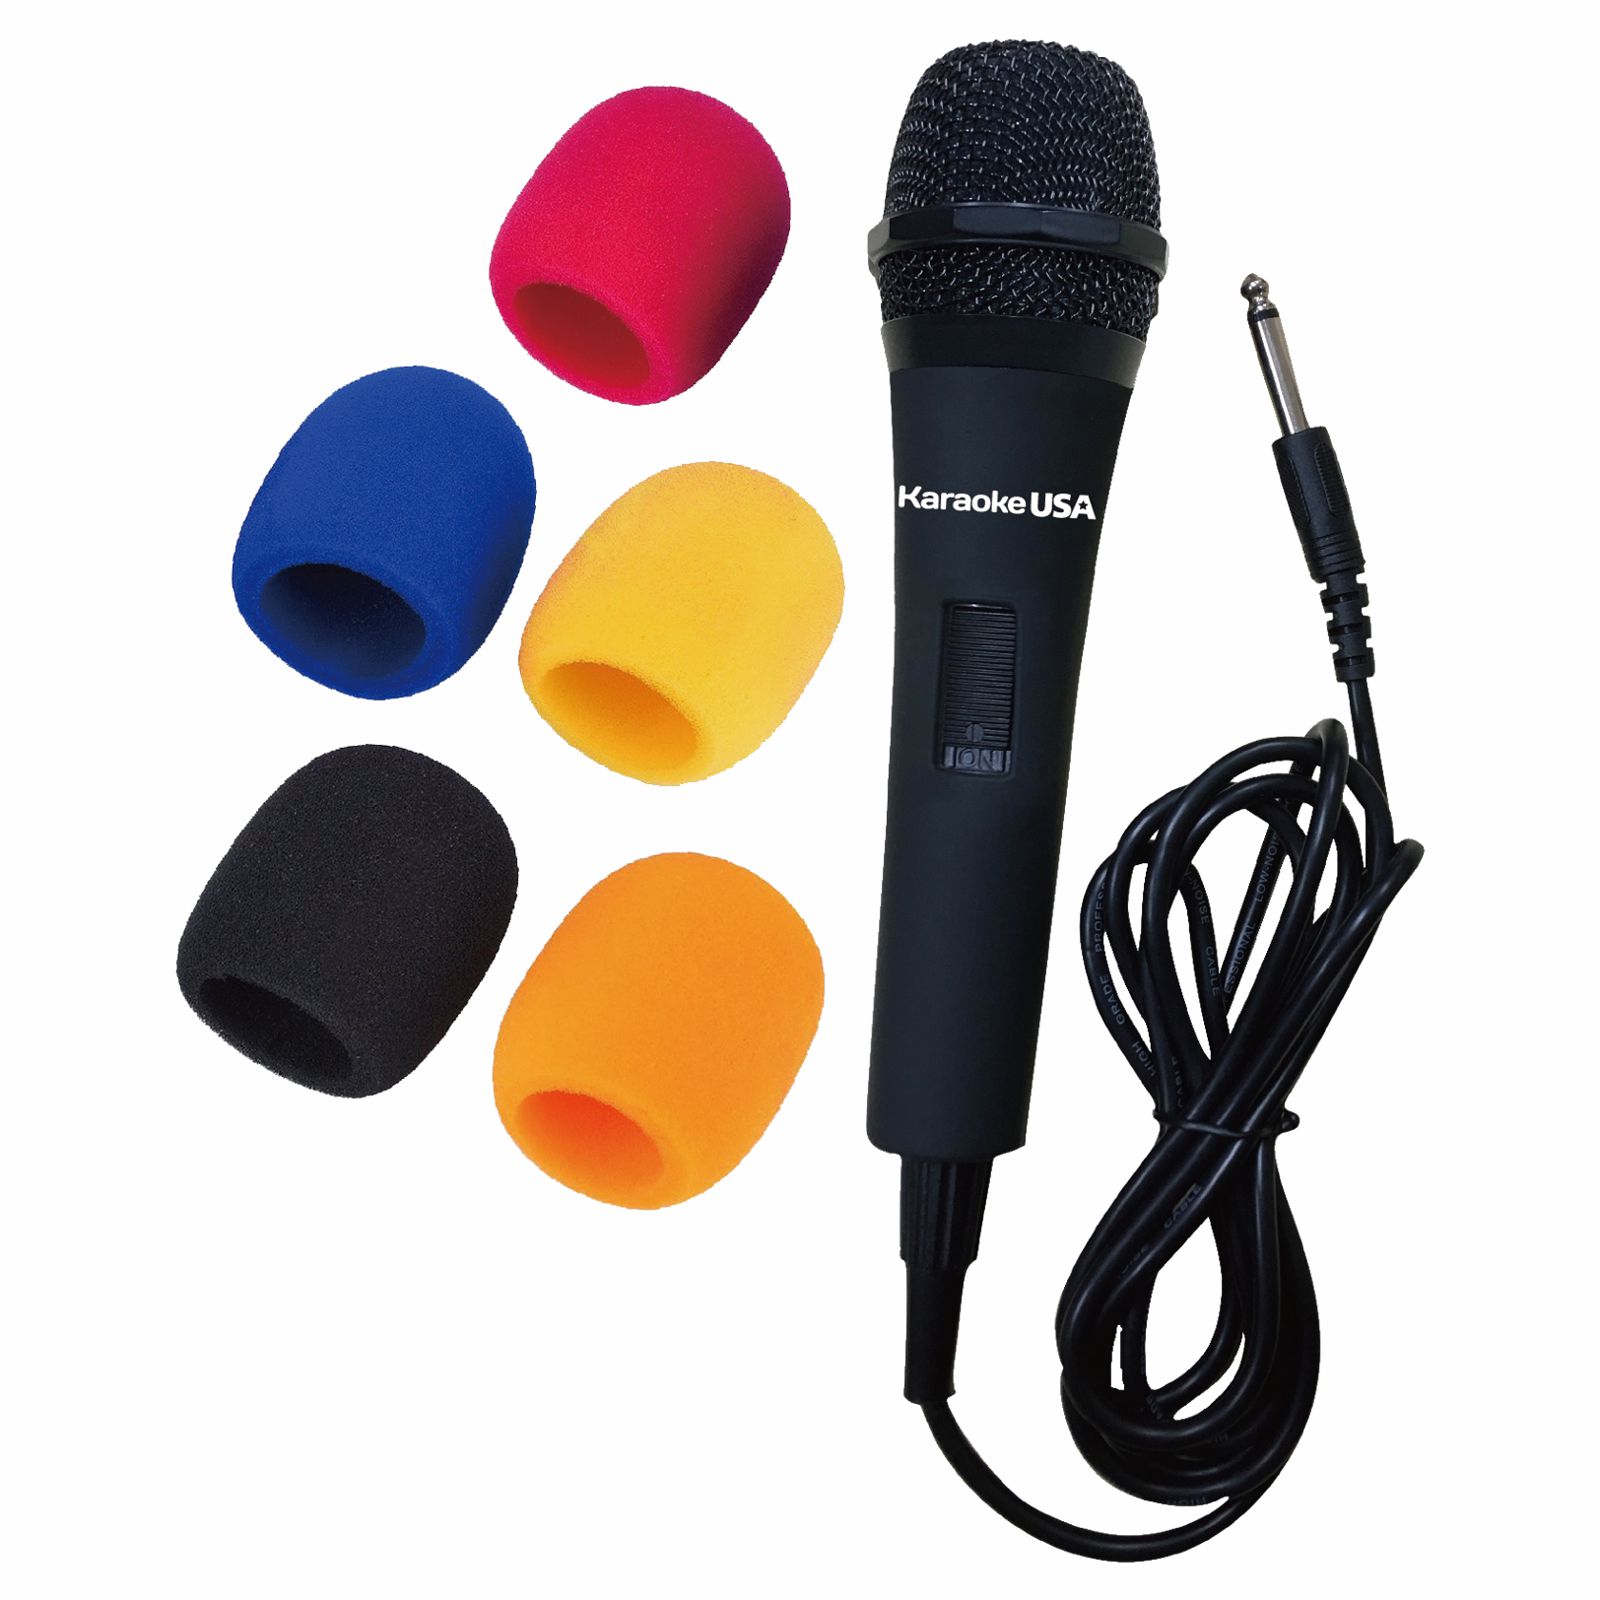 M175 - Professional Microphone